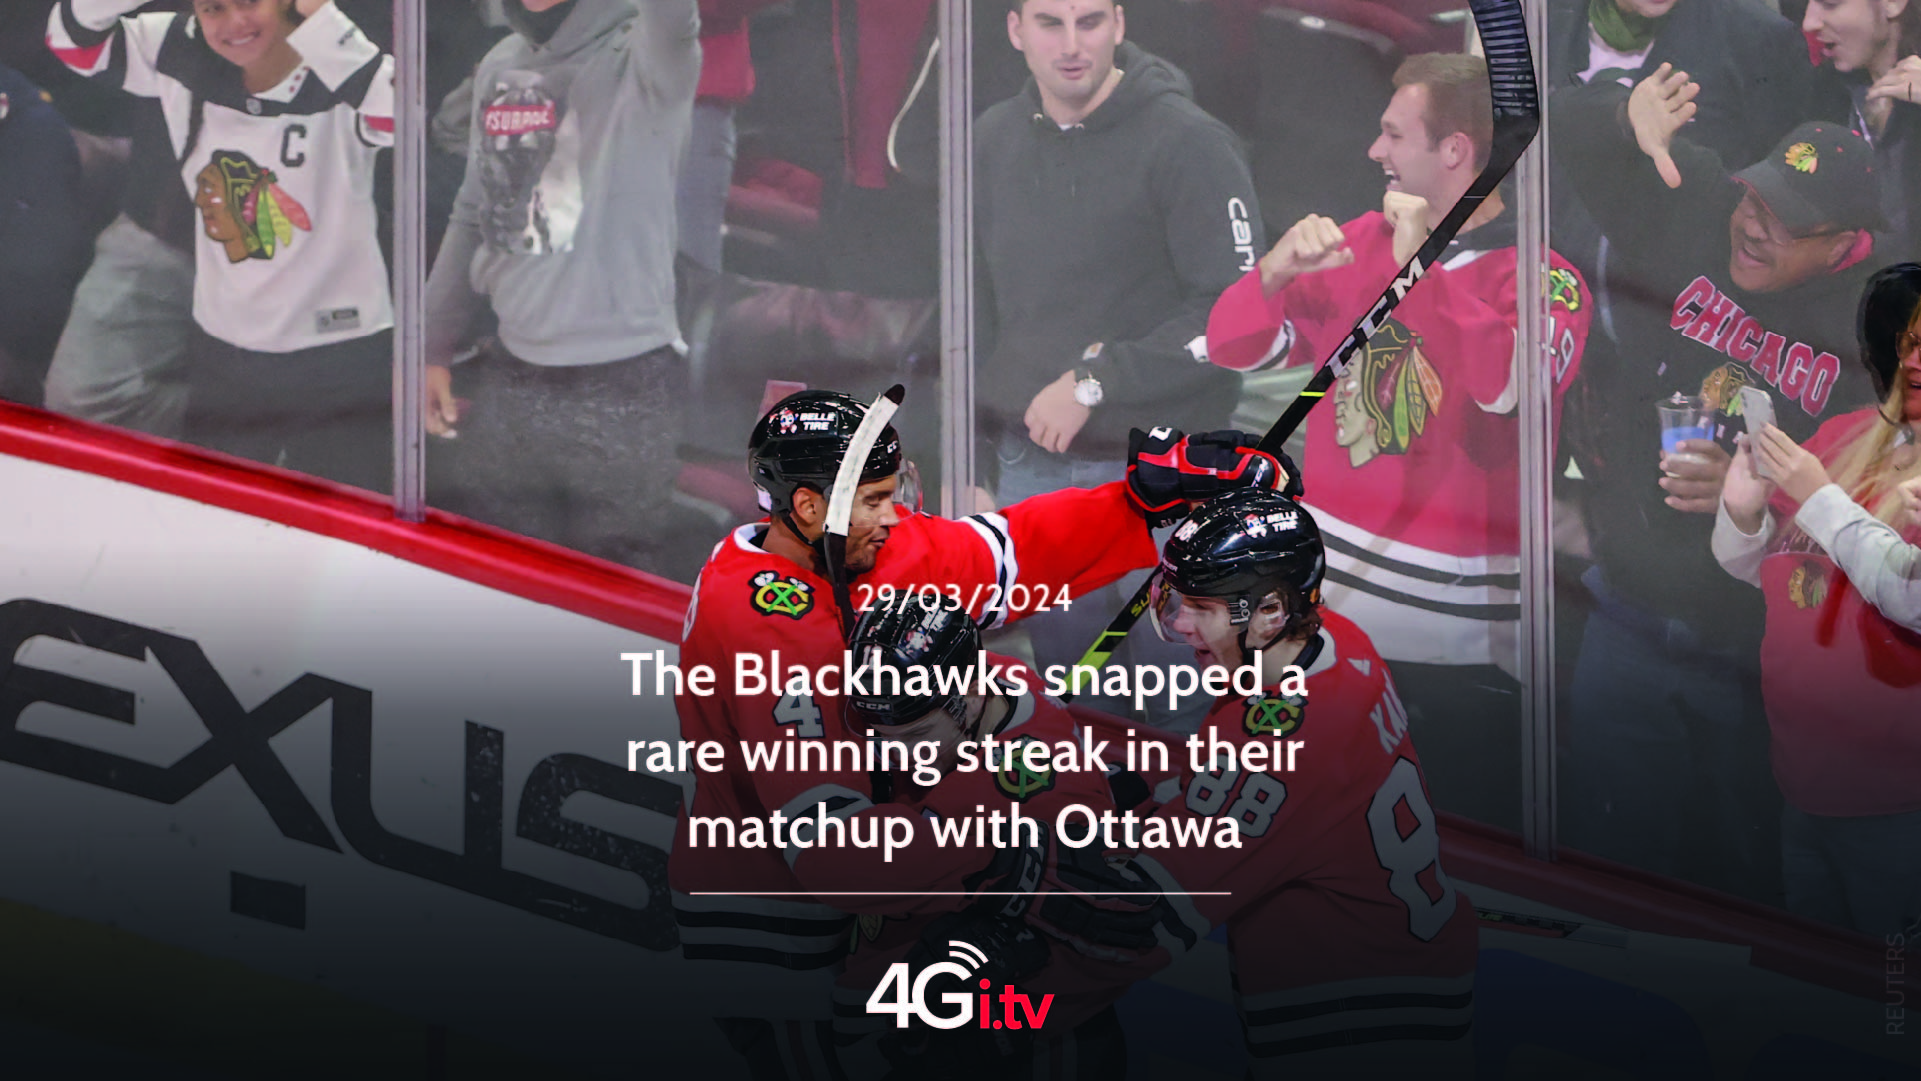 Lee más sobre el artículo The Blackhawks snapped a rare winning streak in their matchup with Ottawa